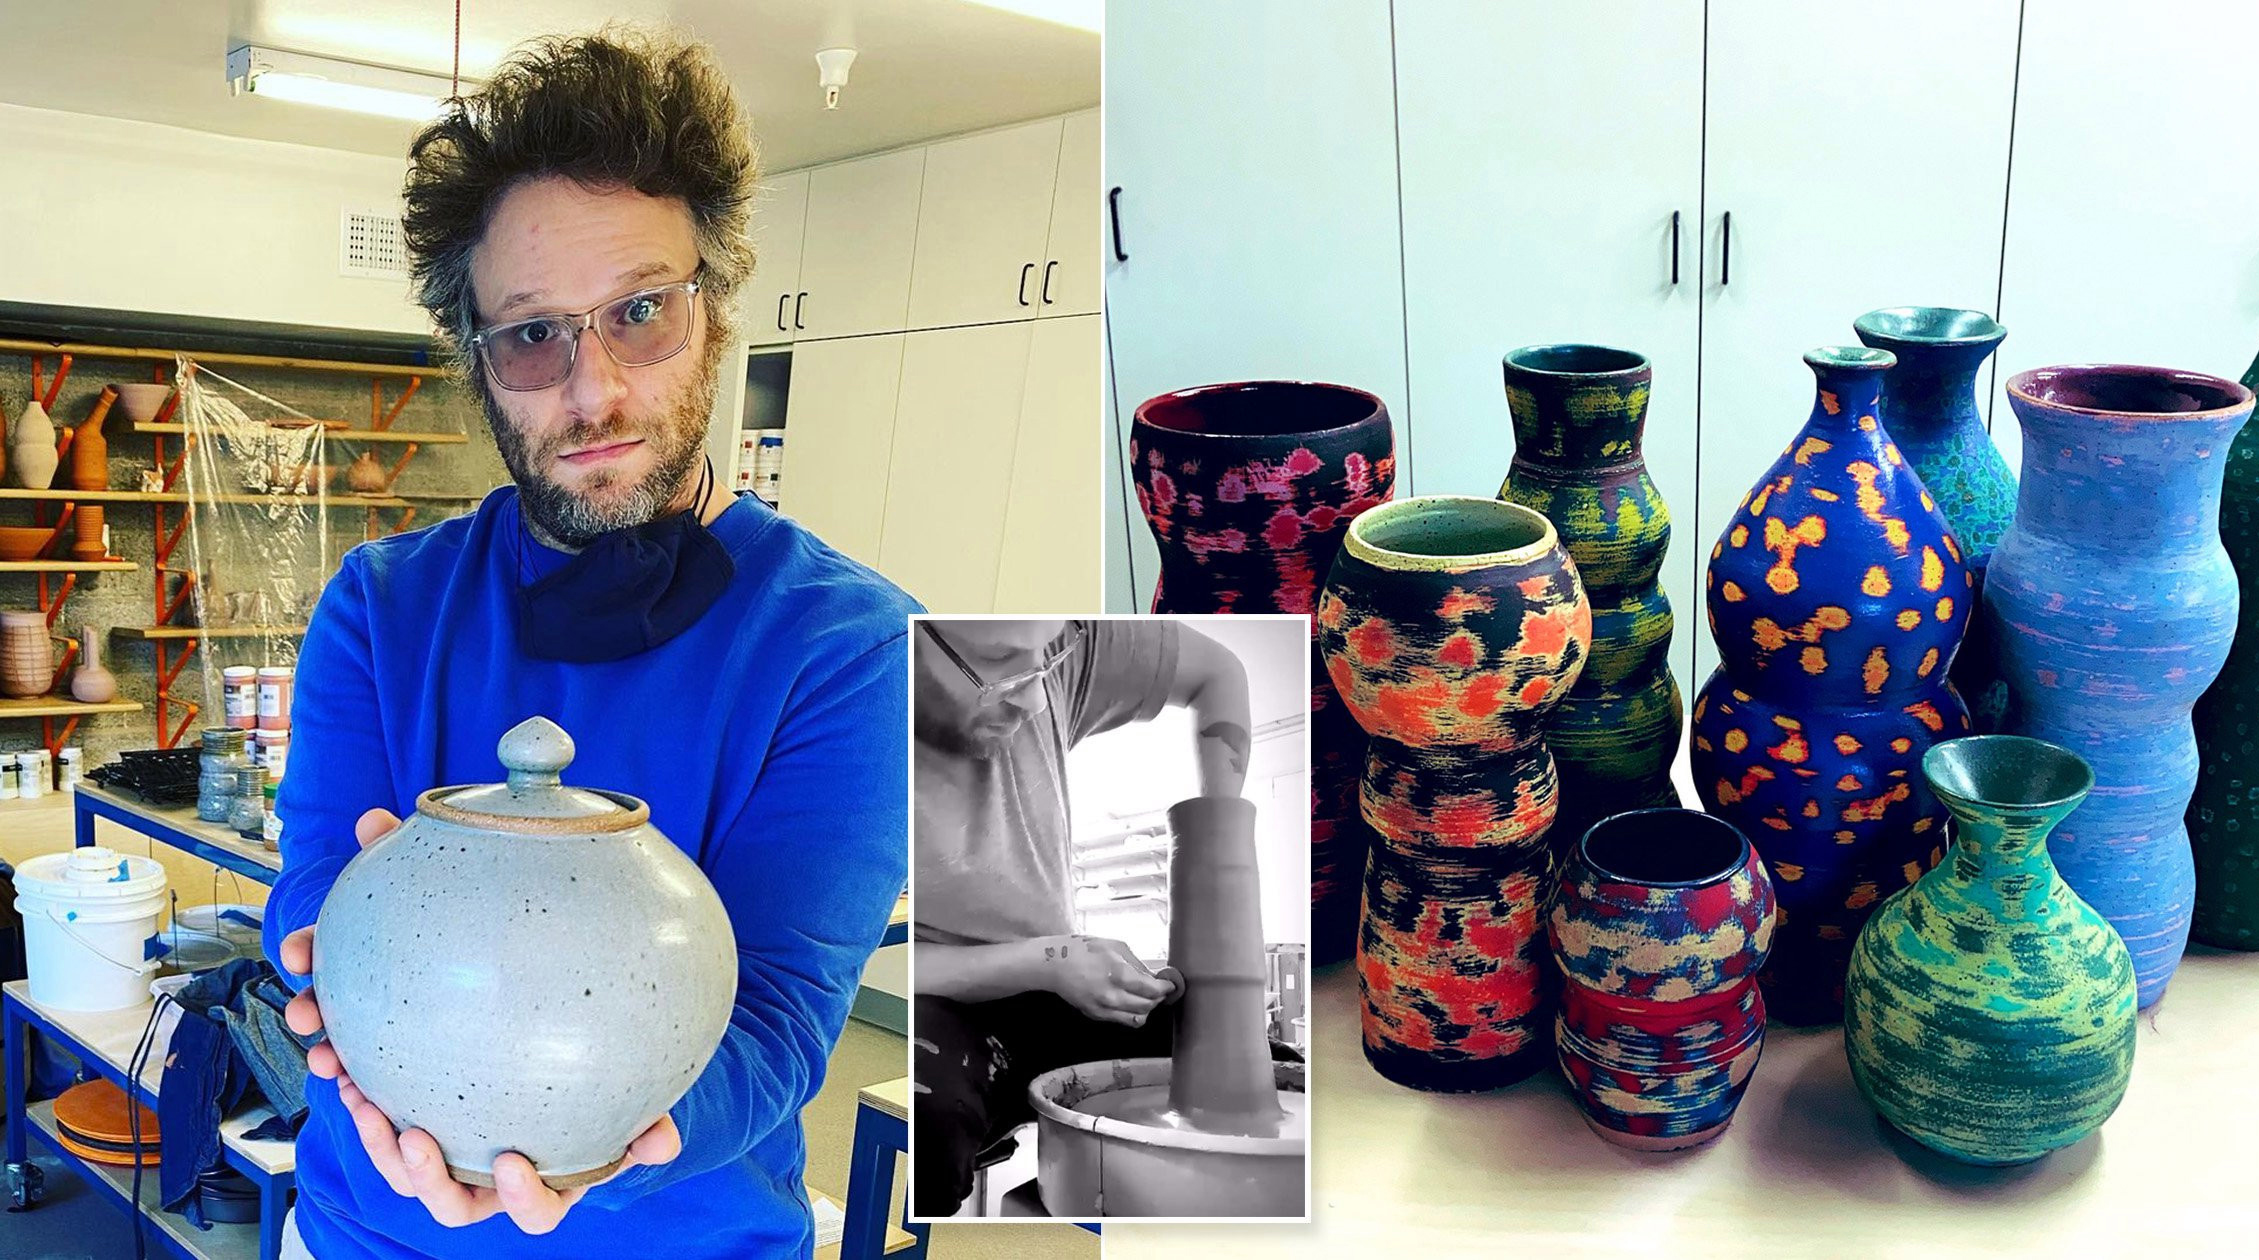 Seth Rogen made thousands of dollars selling a ceramic vase